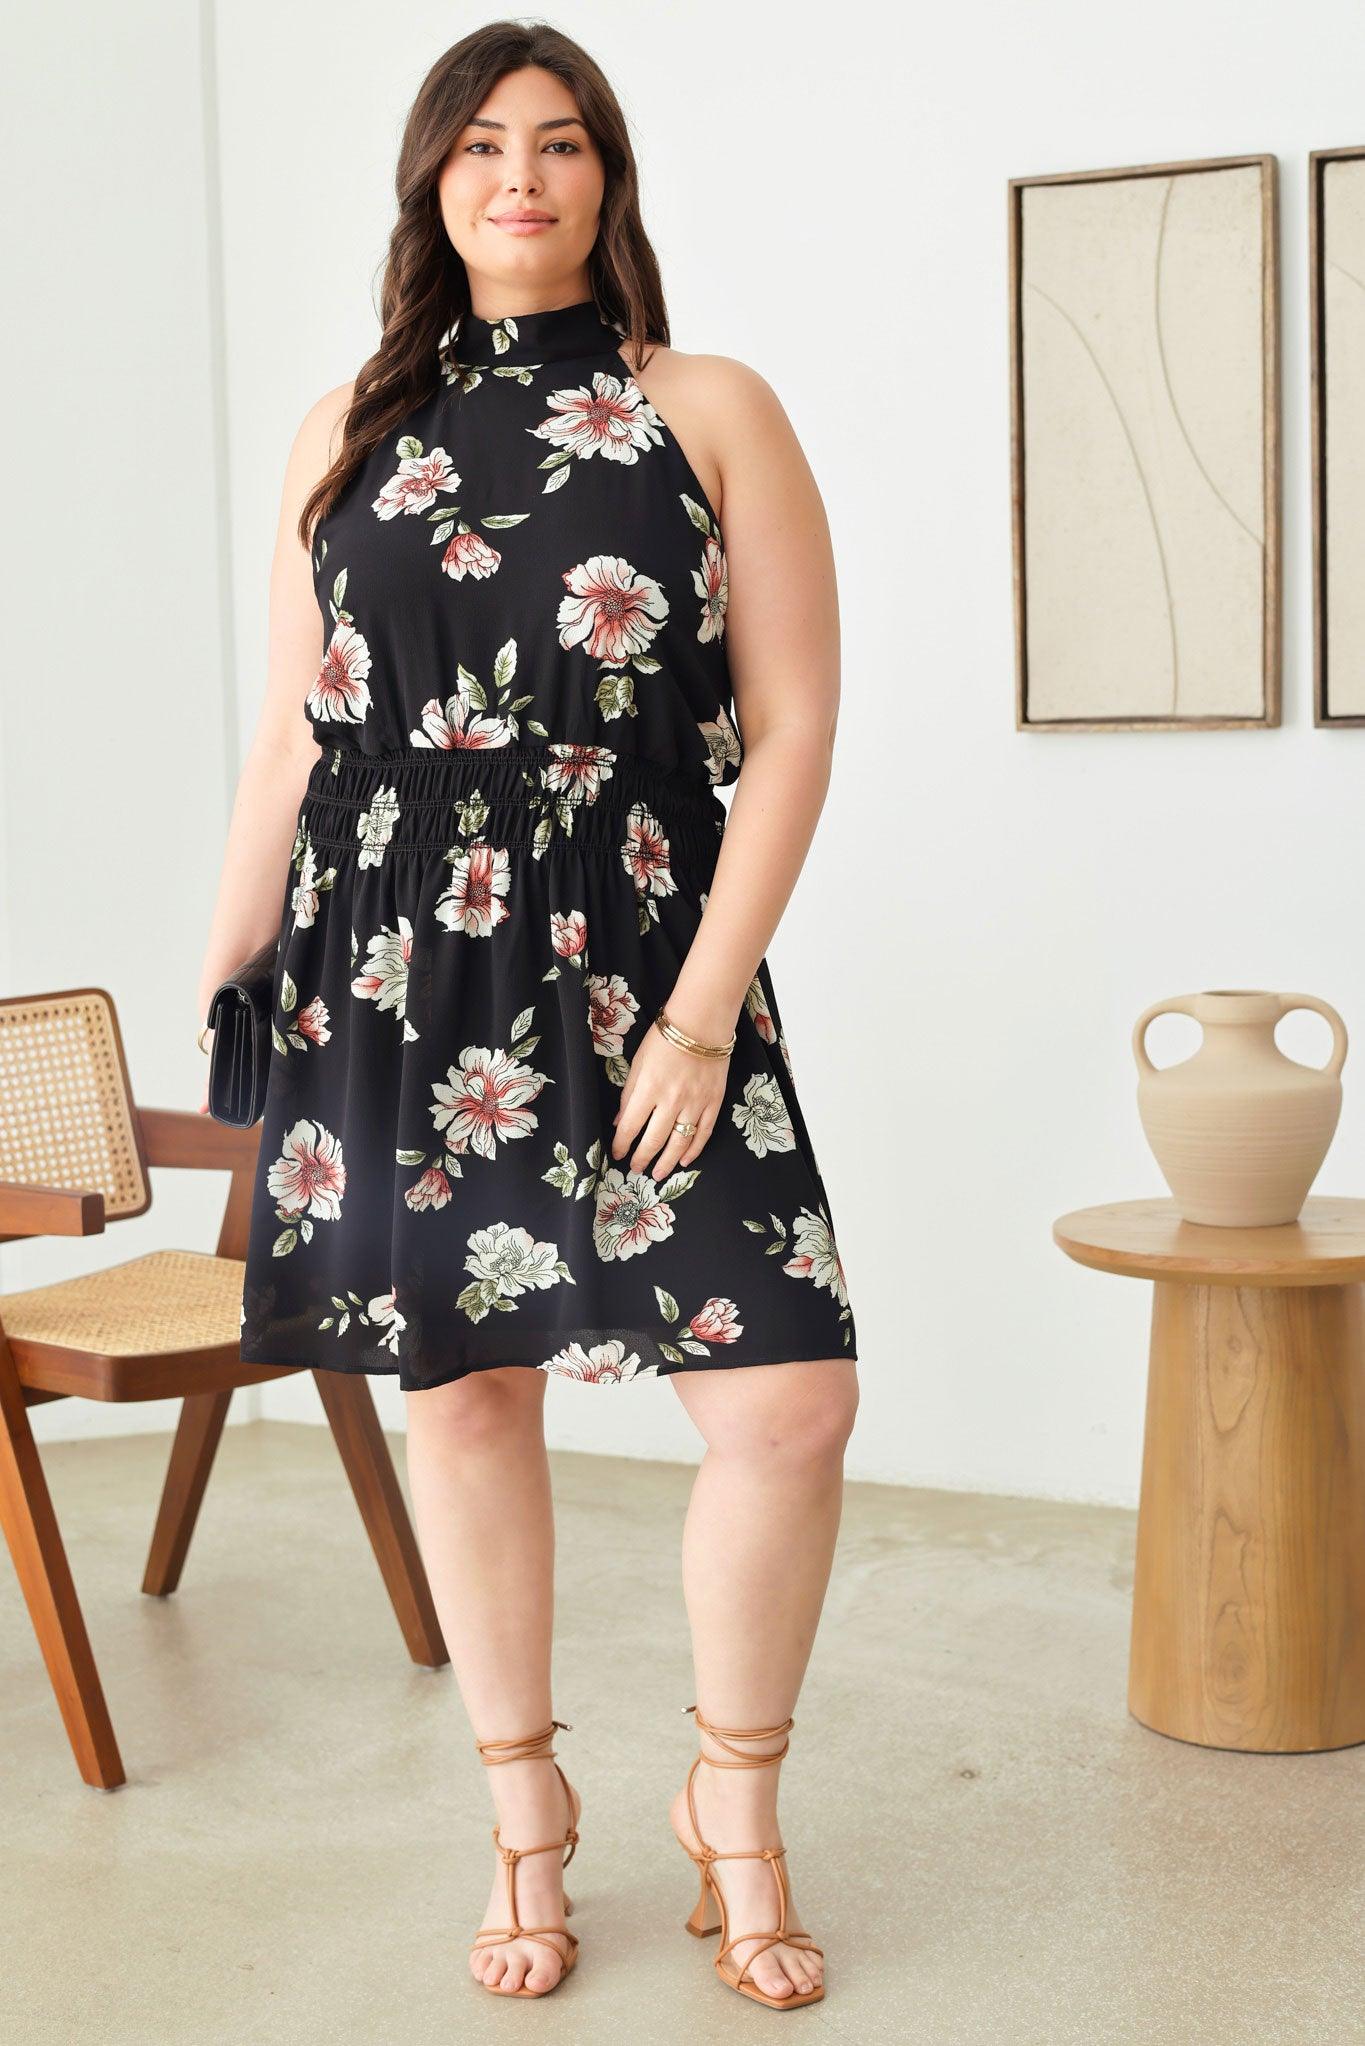 Plus Size Floral Print Knee Length Sleeveless Halter Dress - Tasha Apparel Wholesale